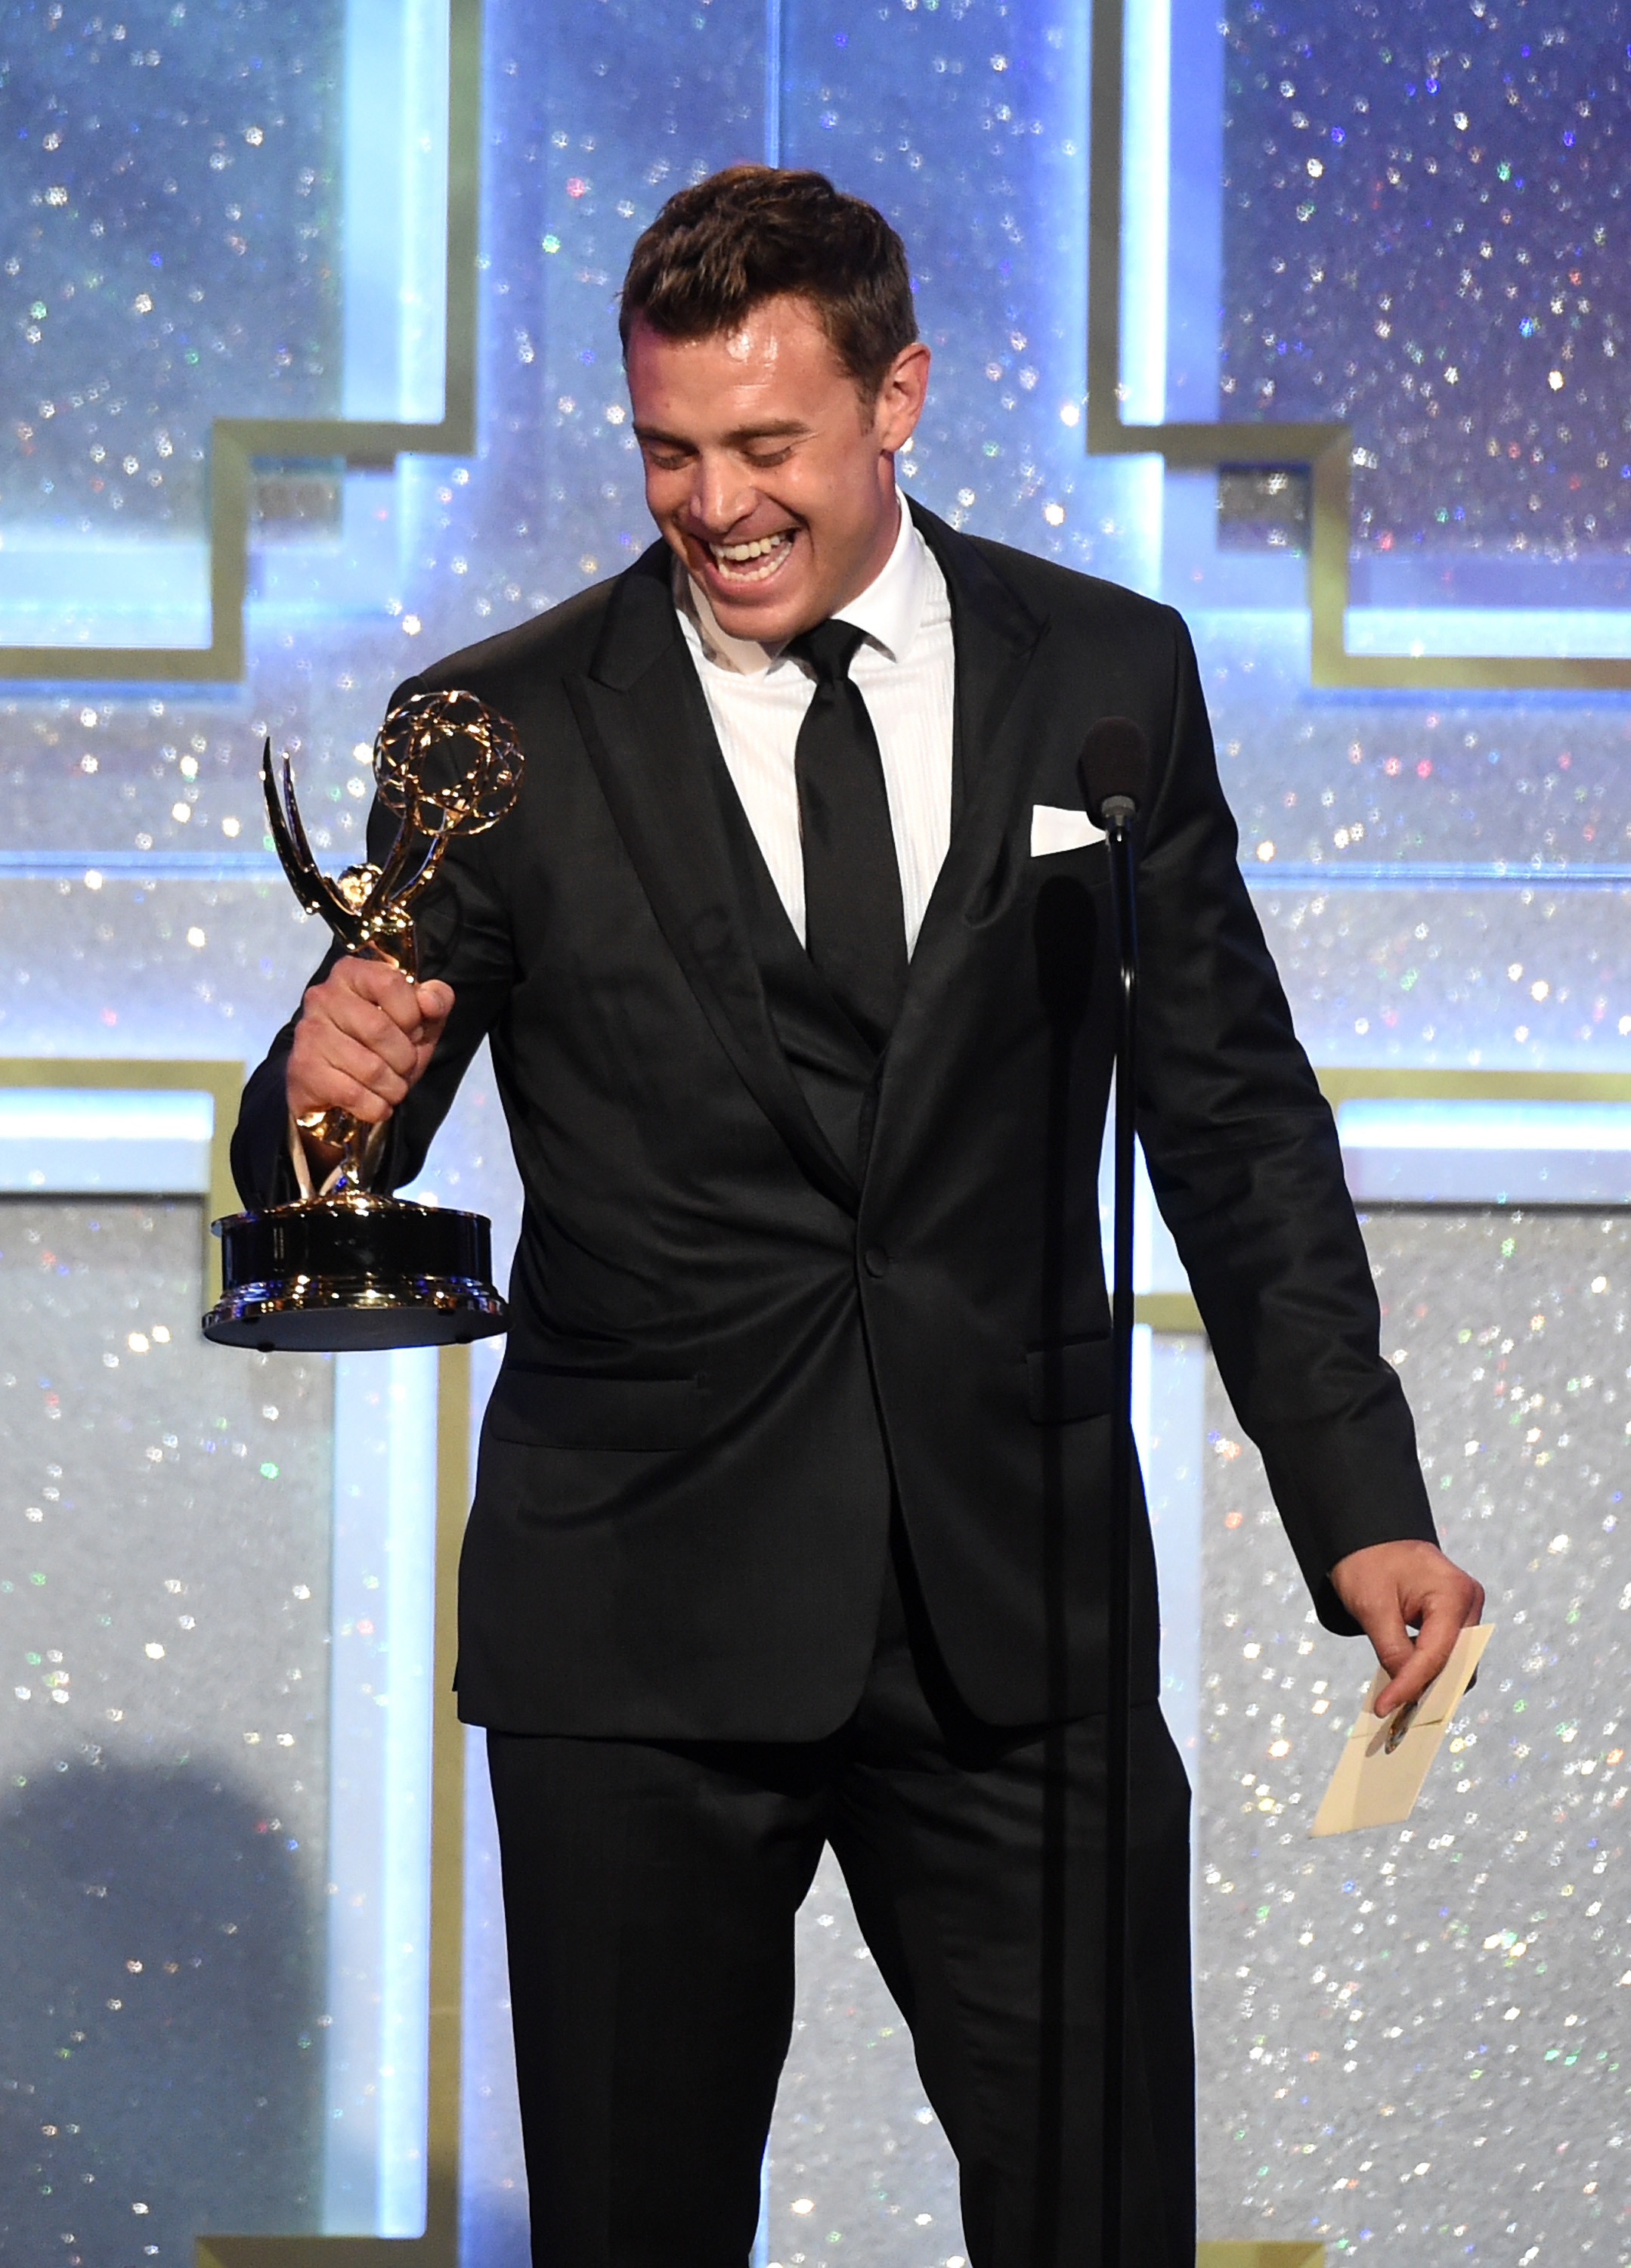 Billy Miller bei den 41st Annual Daytime Emmy Awards in Beverly Hills, 2014 | Quelle: Getty Images